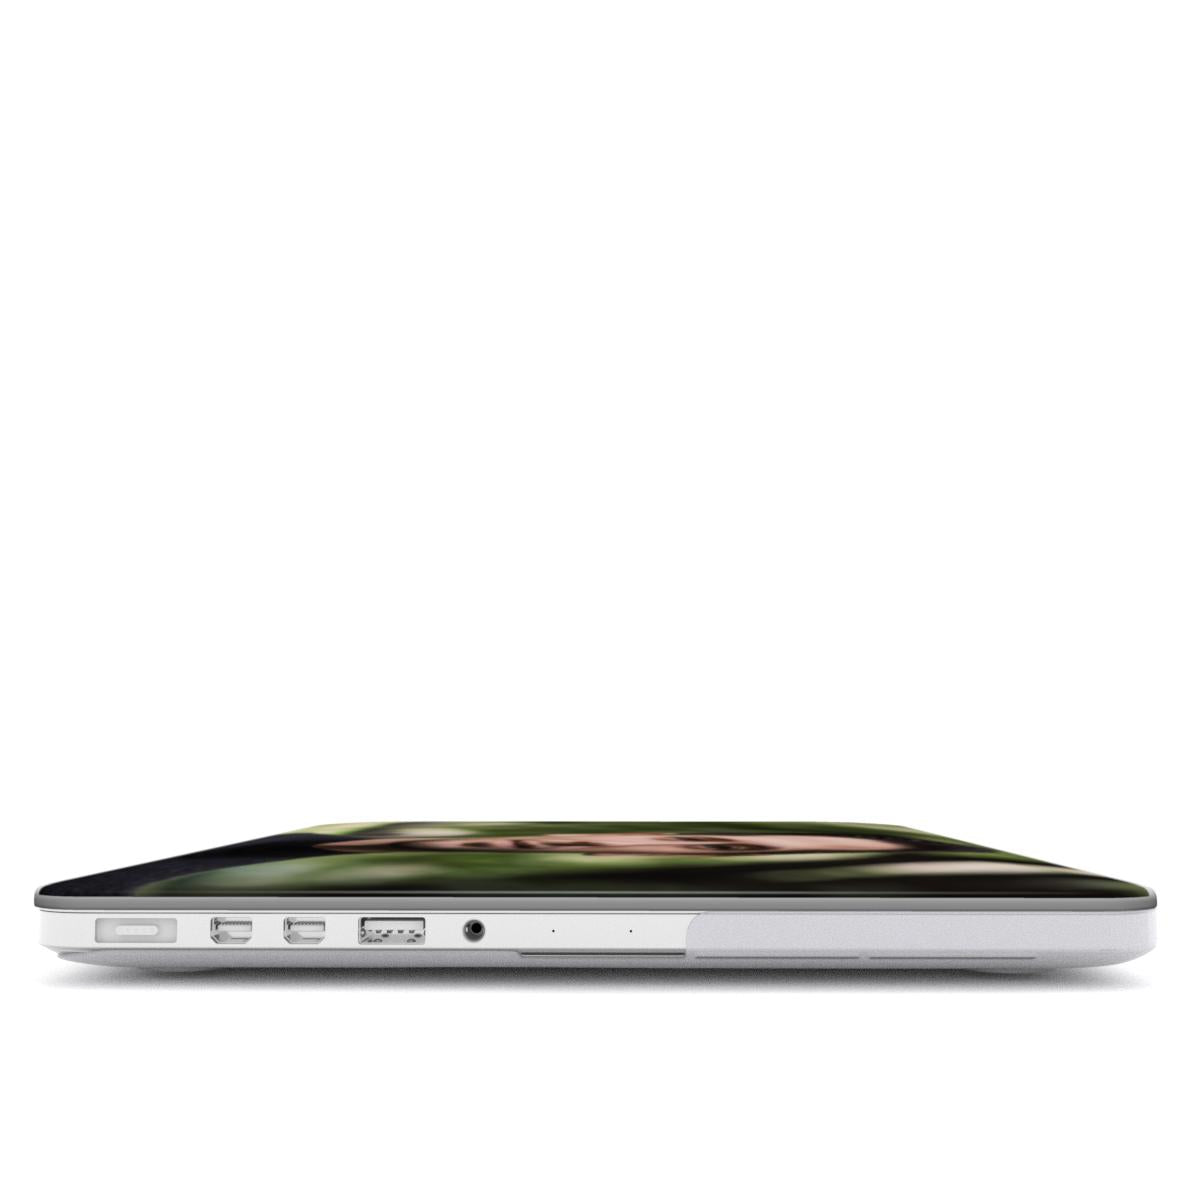 Print On Demand MacBook Case